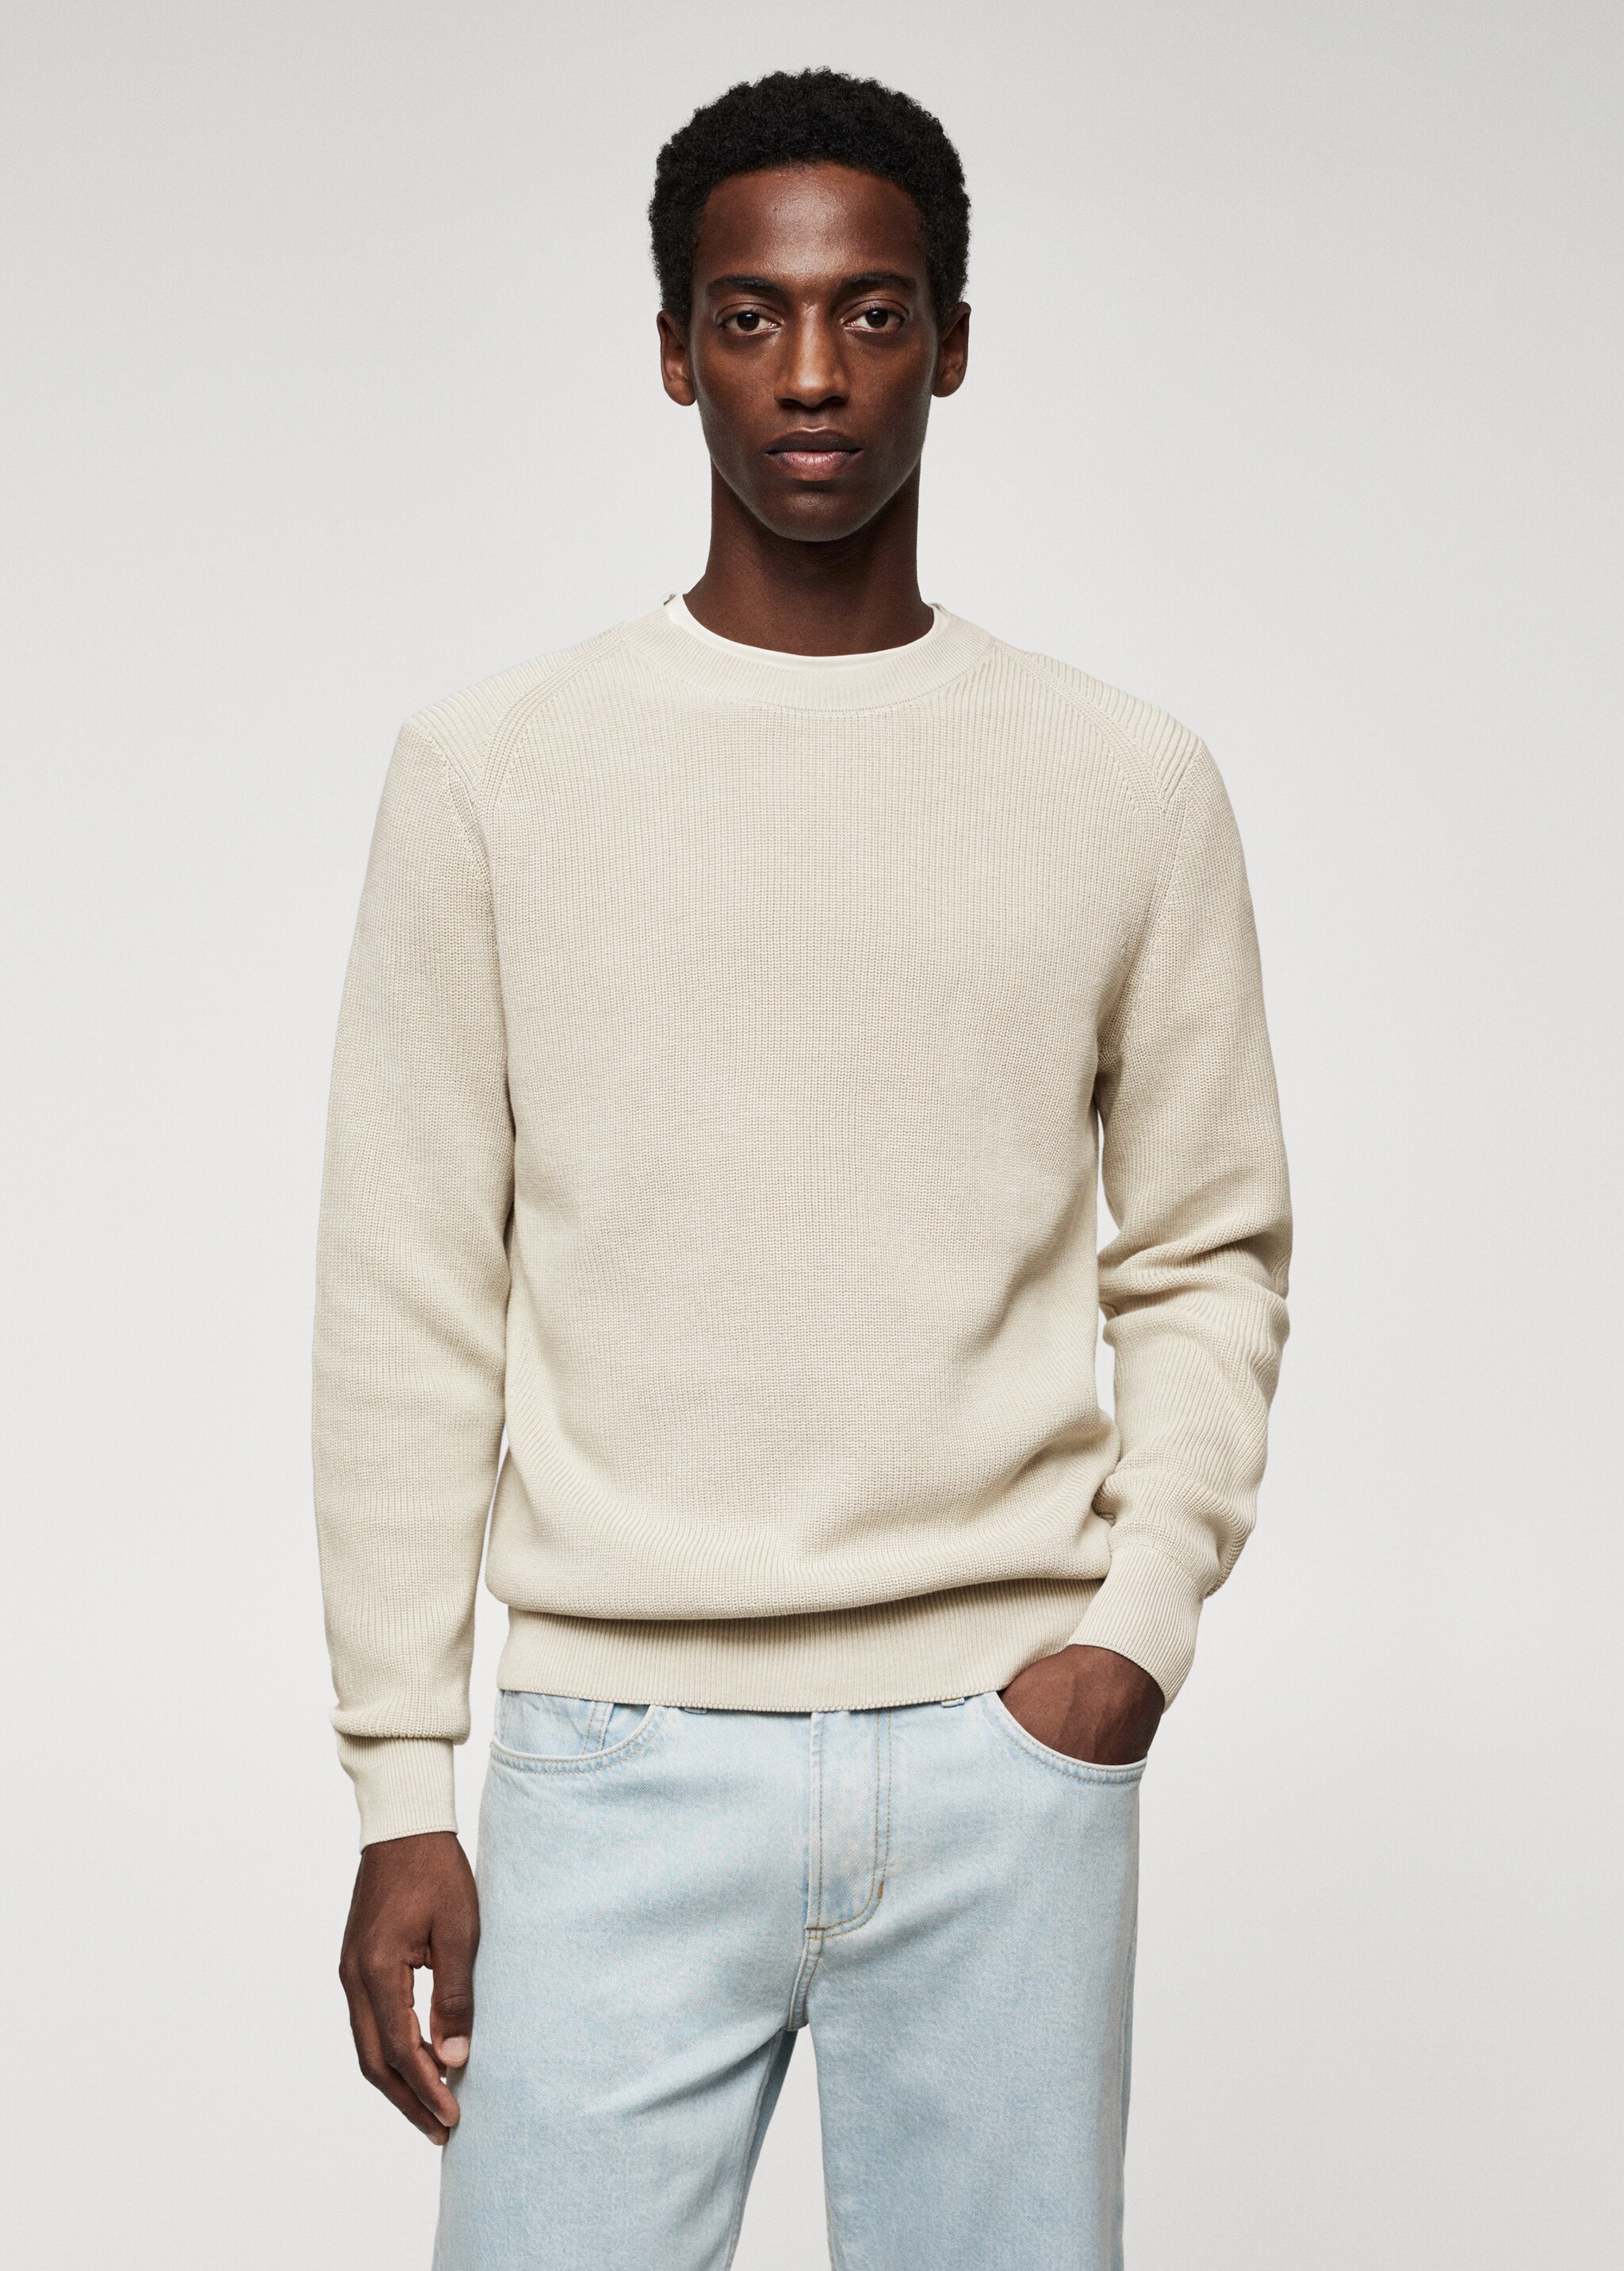 Structured cotton sweater - Medium plane